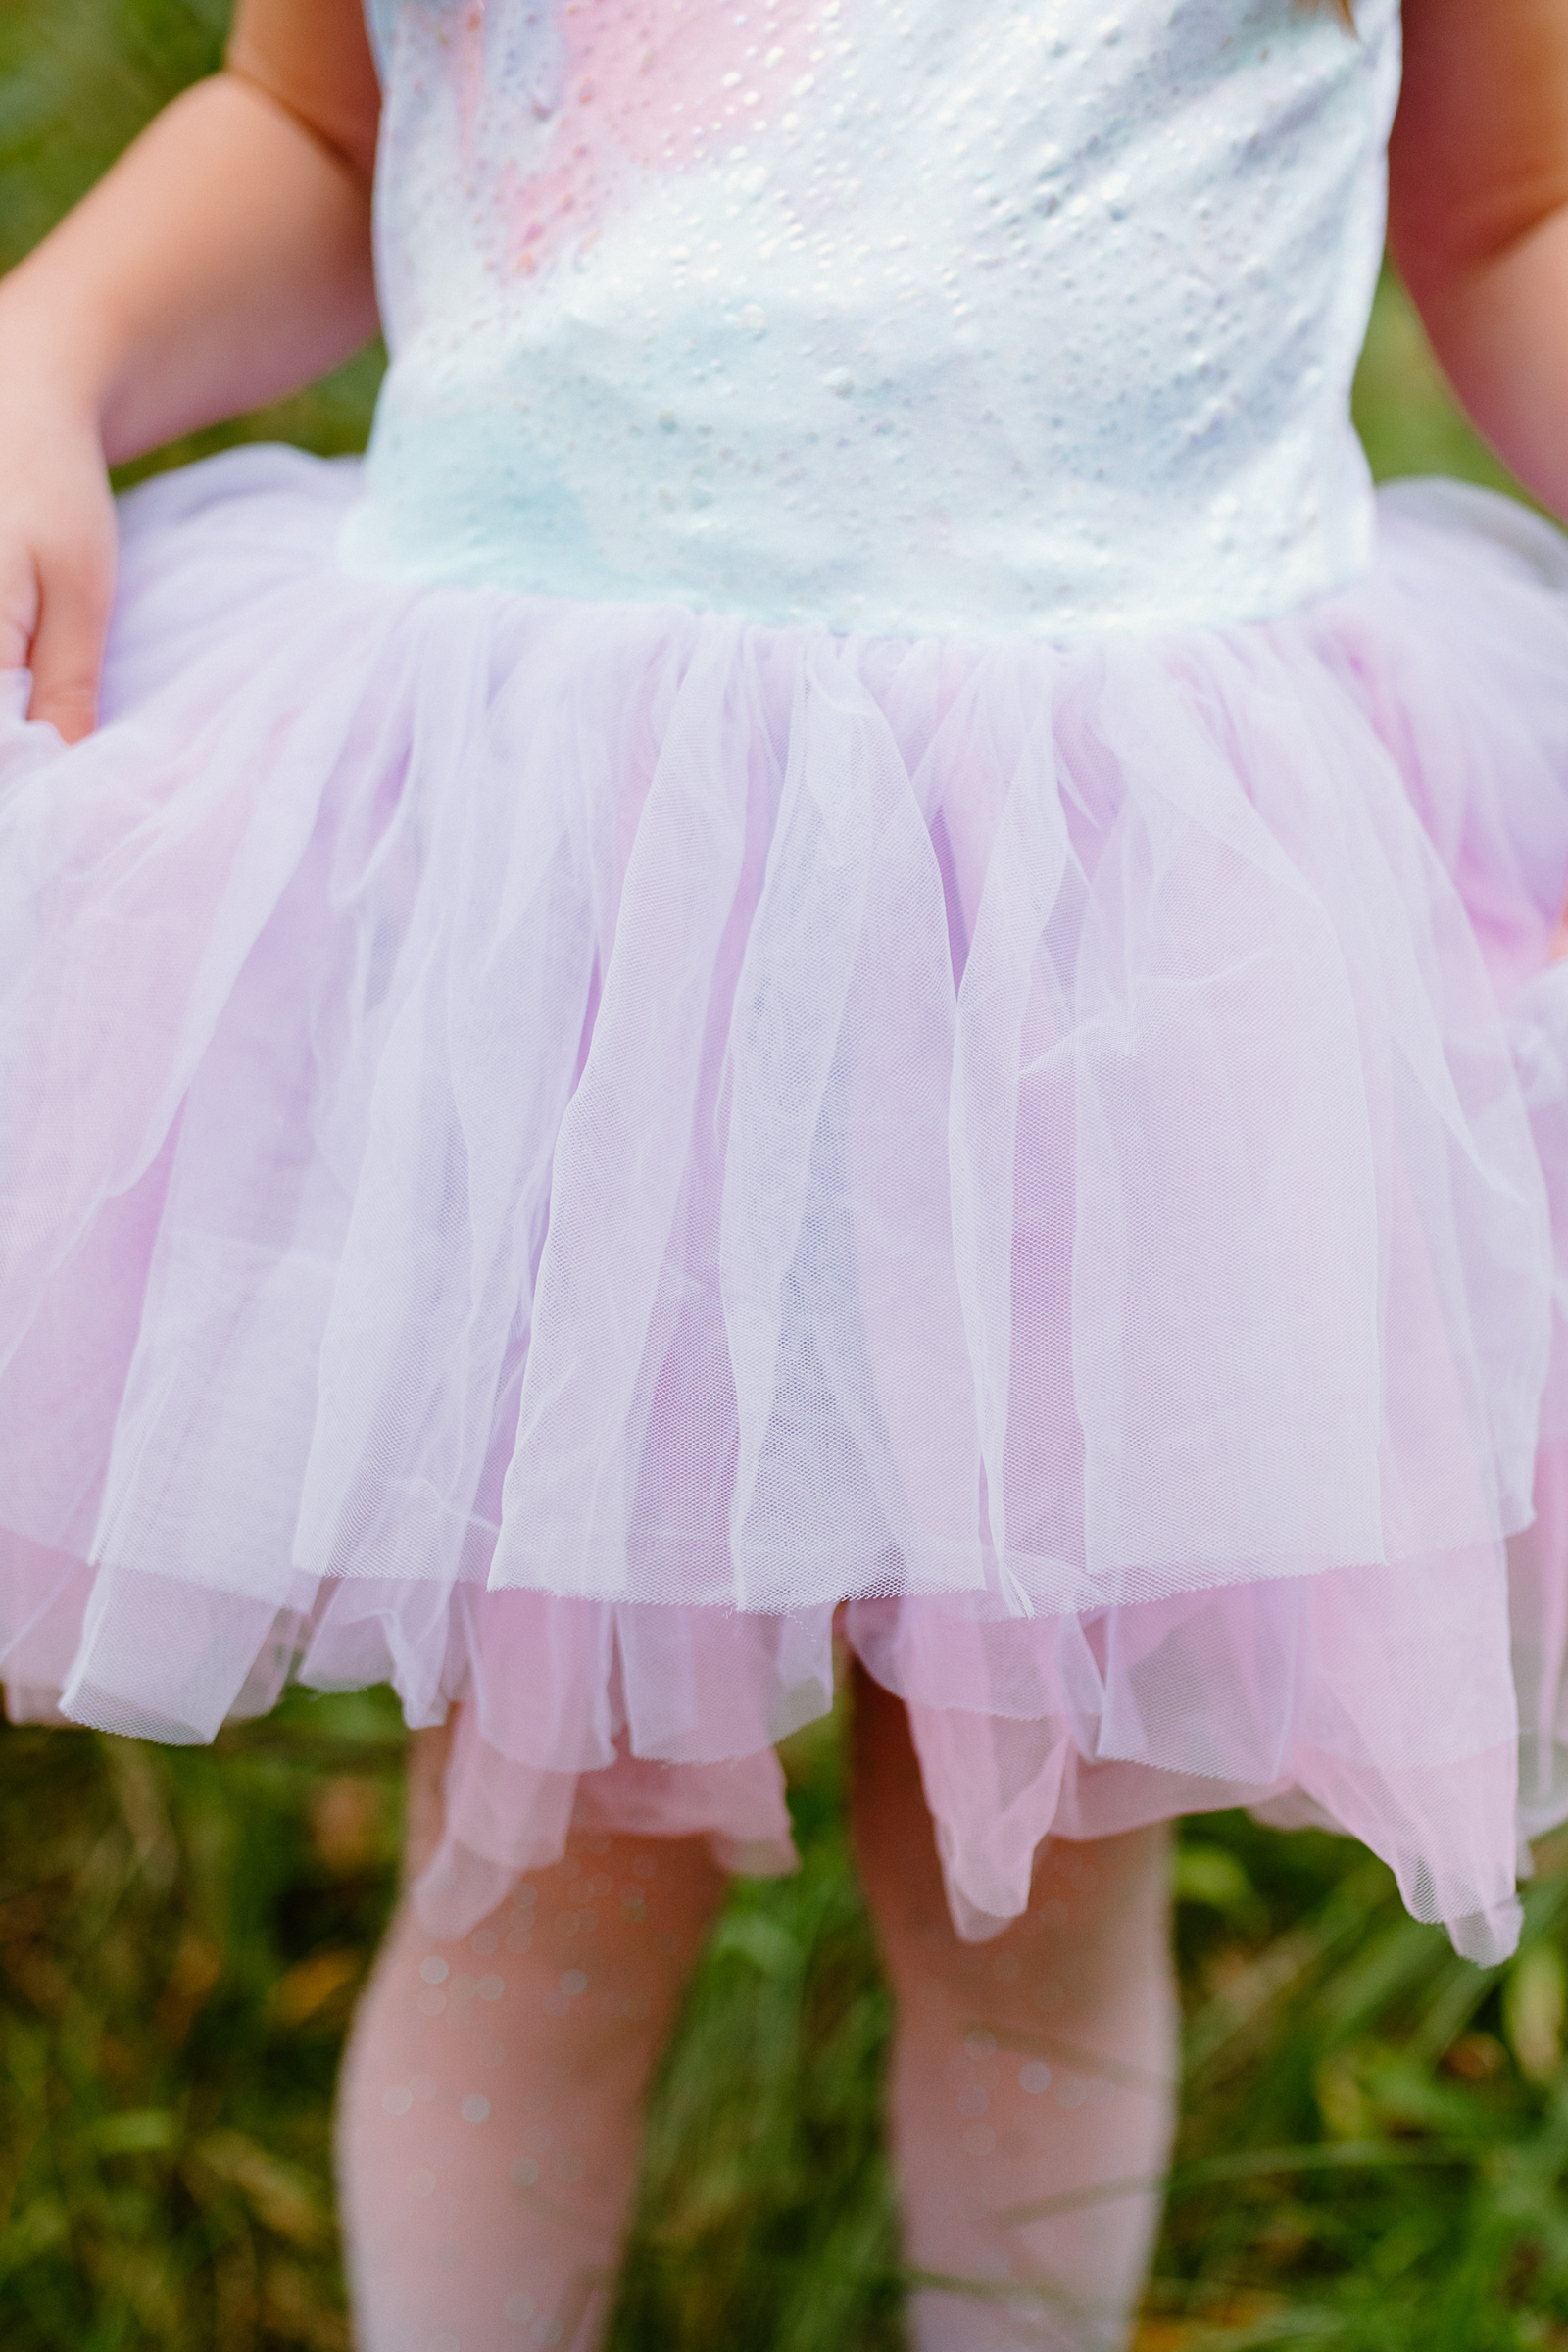 Multi/Lilac Ballet Tutu Dress